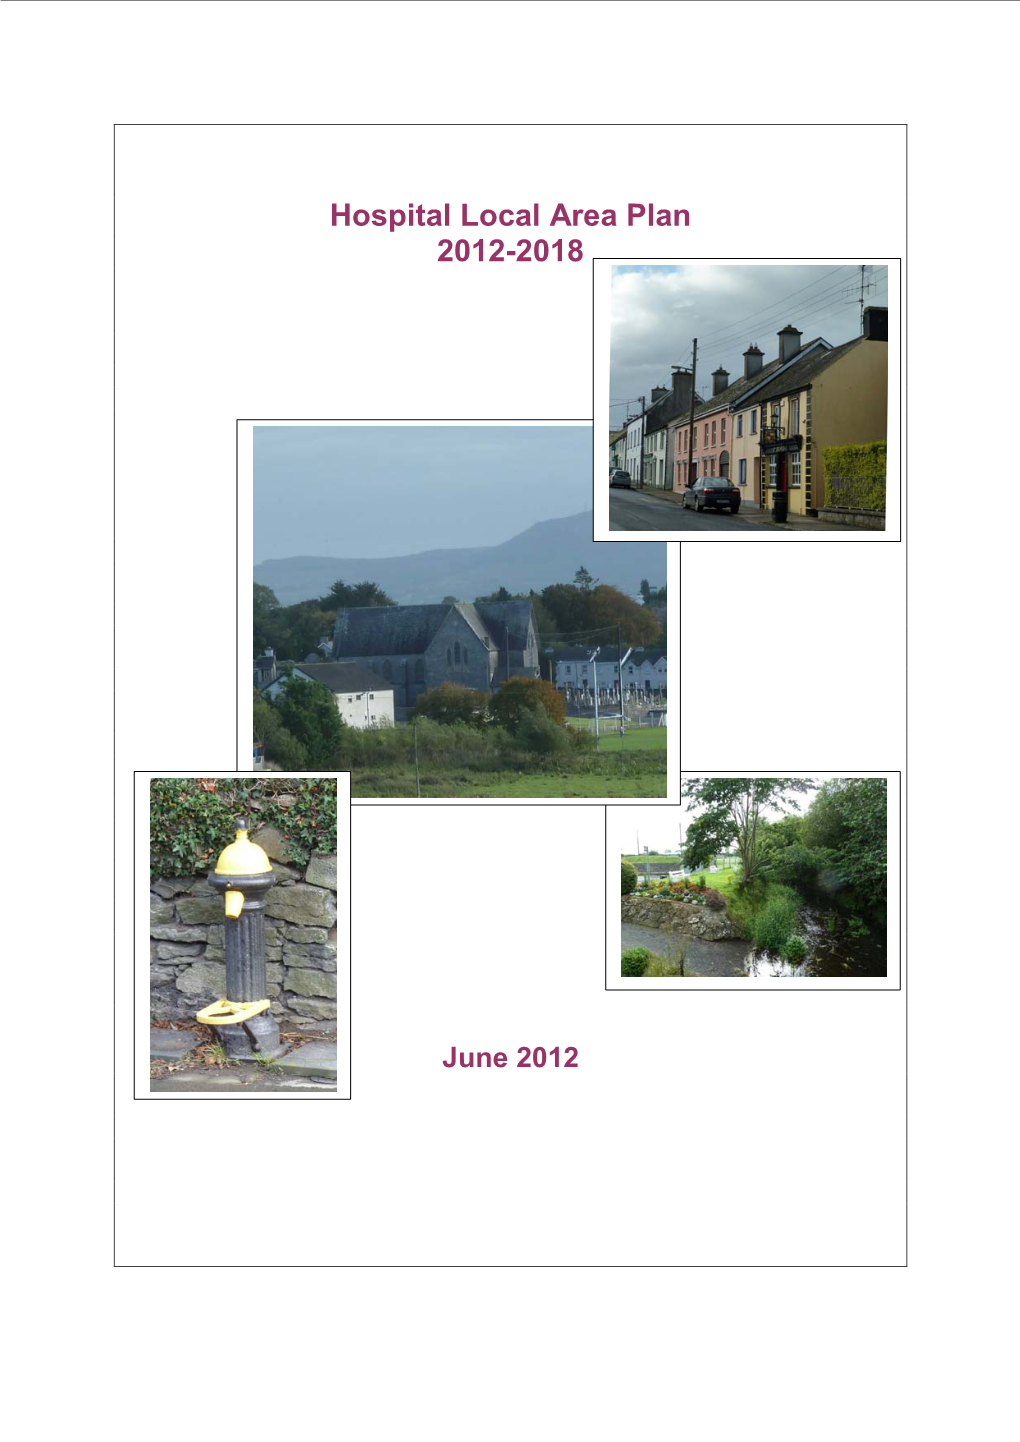 Hospital Local Area Plan 2012-2018